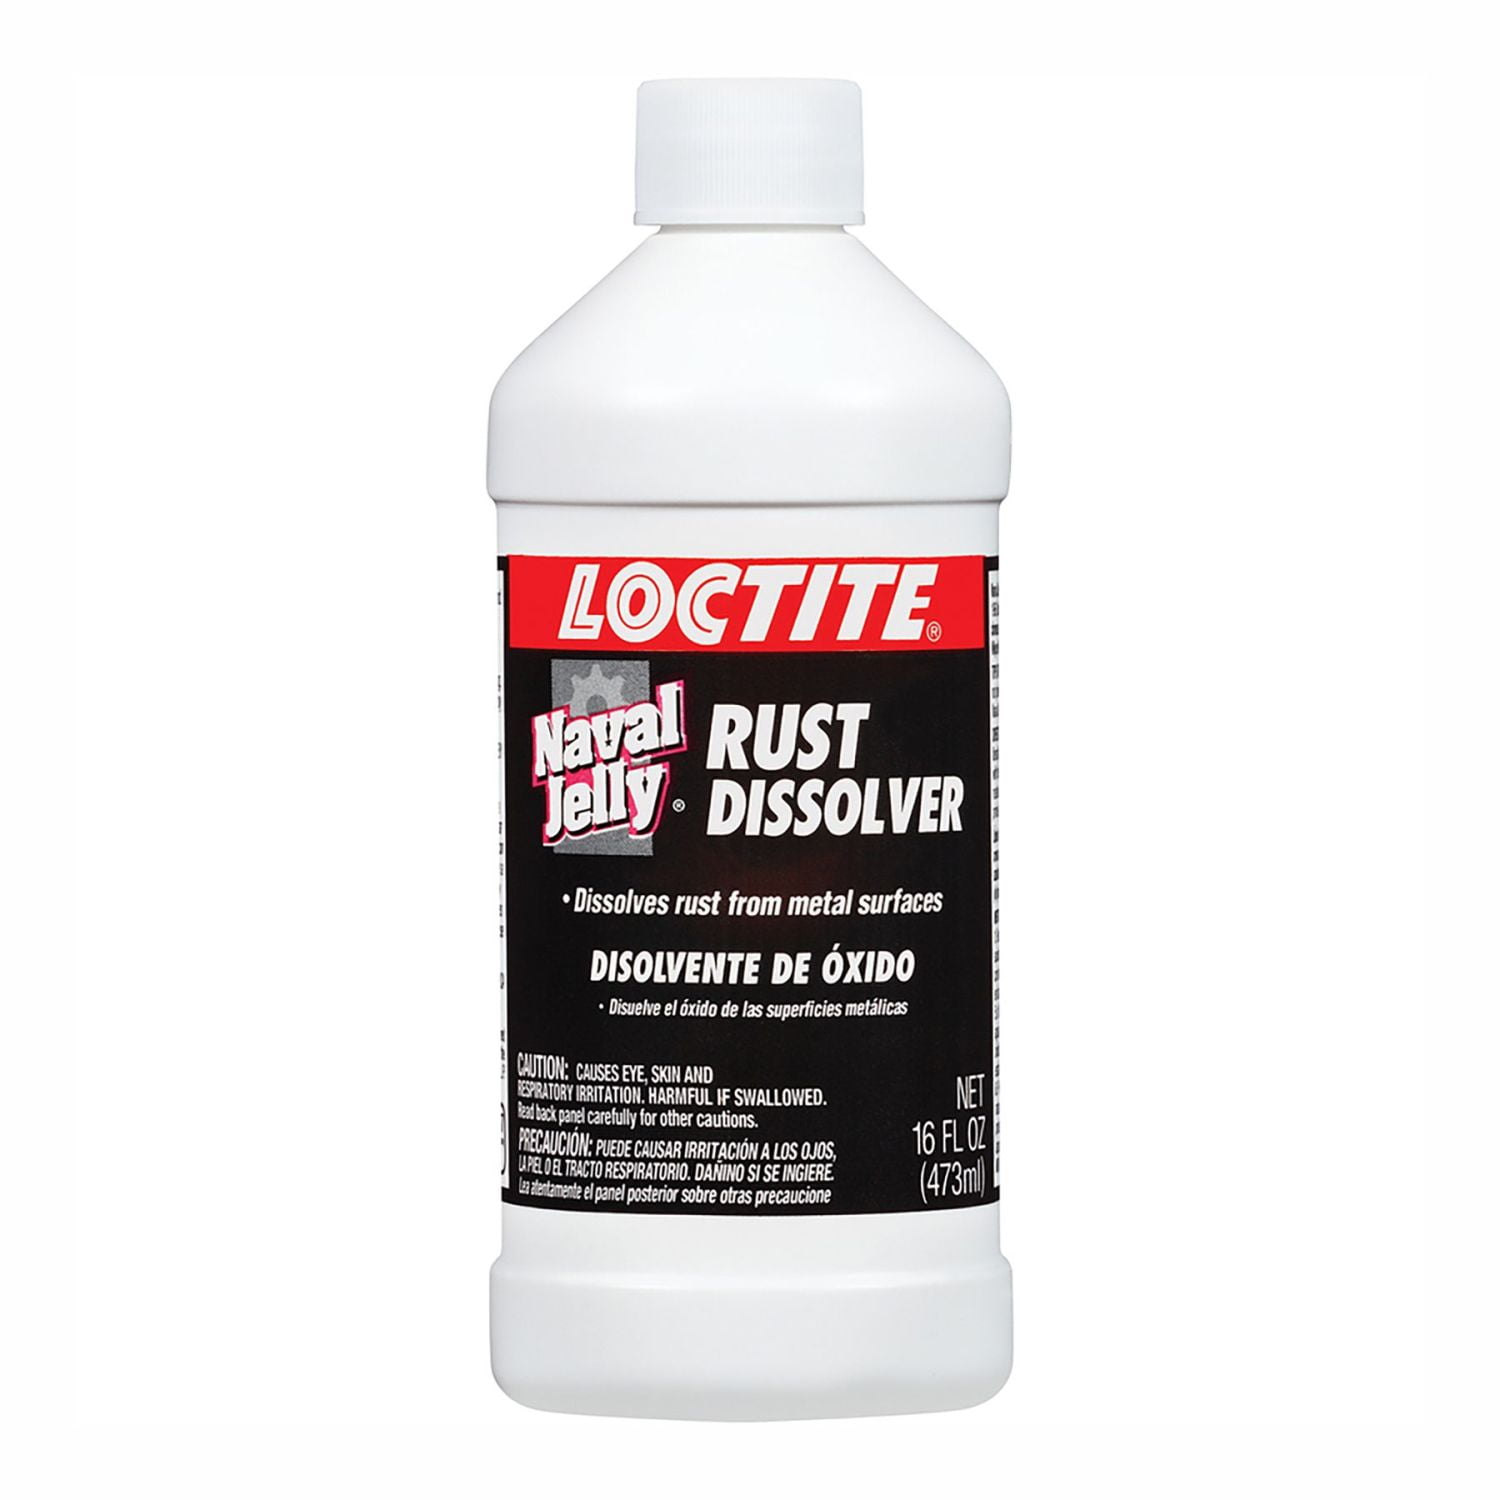 Loctite Naval Jelly Rust Dissolver, Pink 16 fl oz Bottle